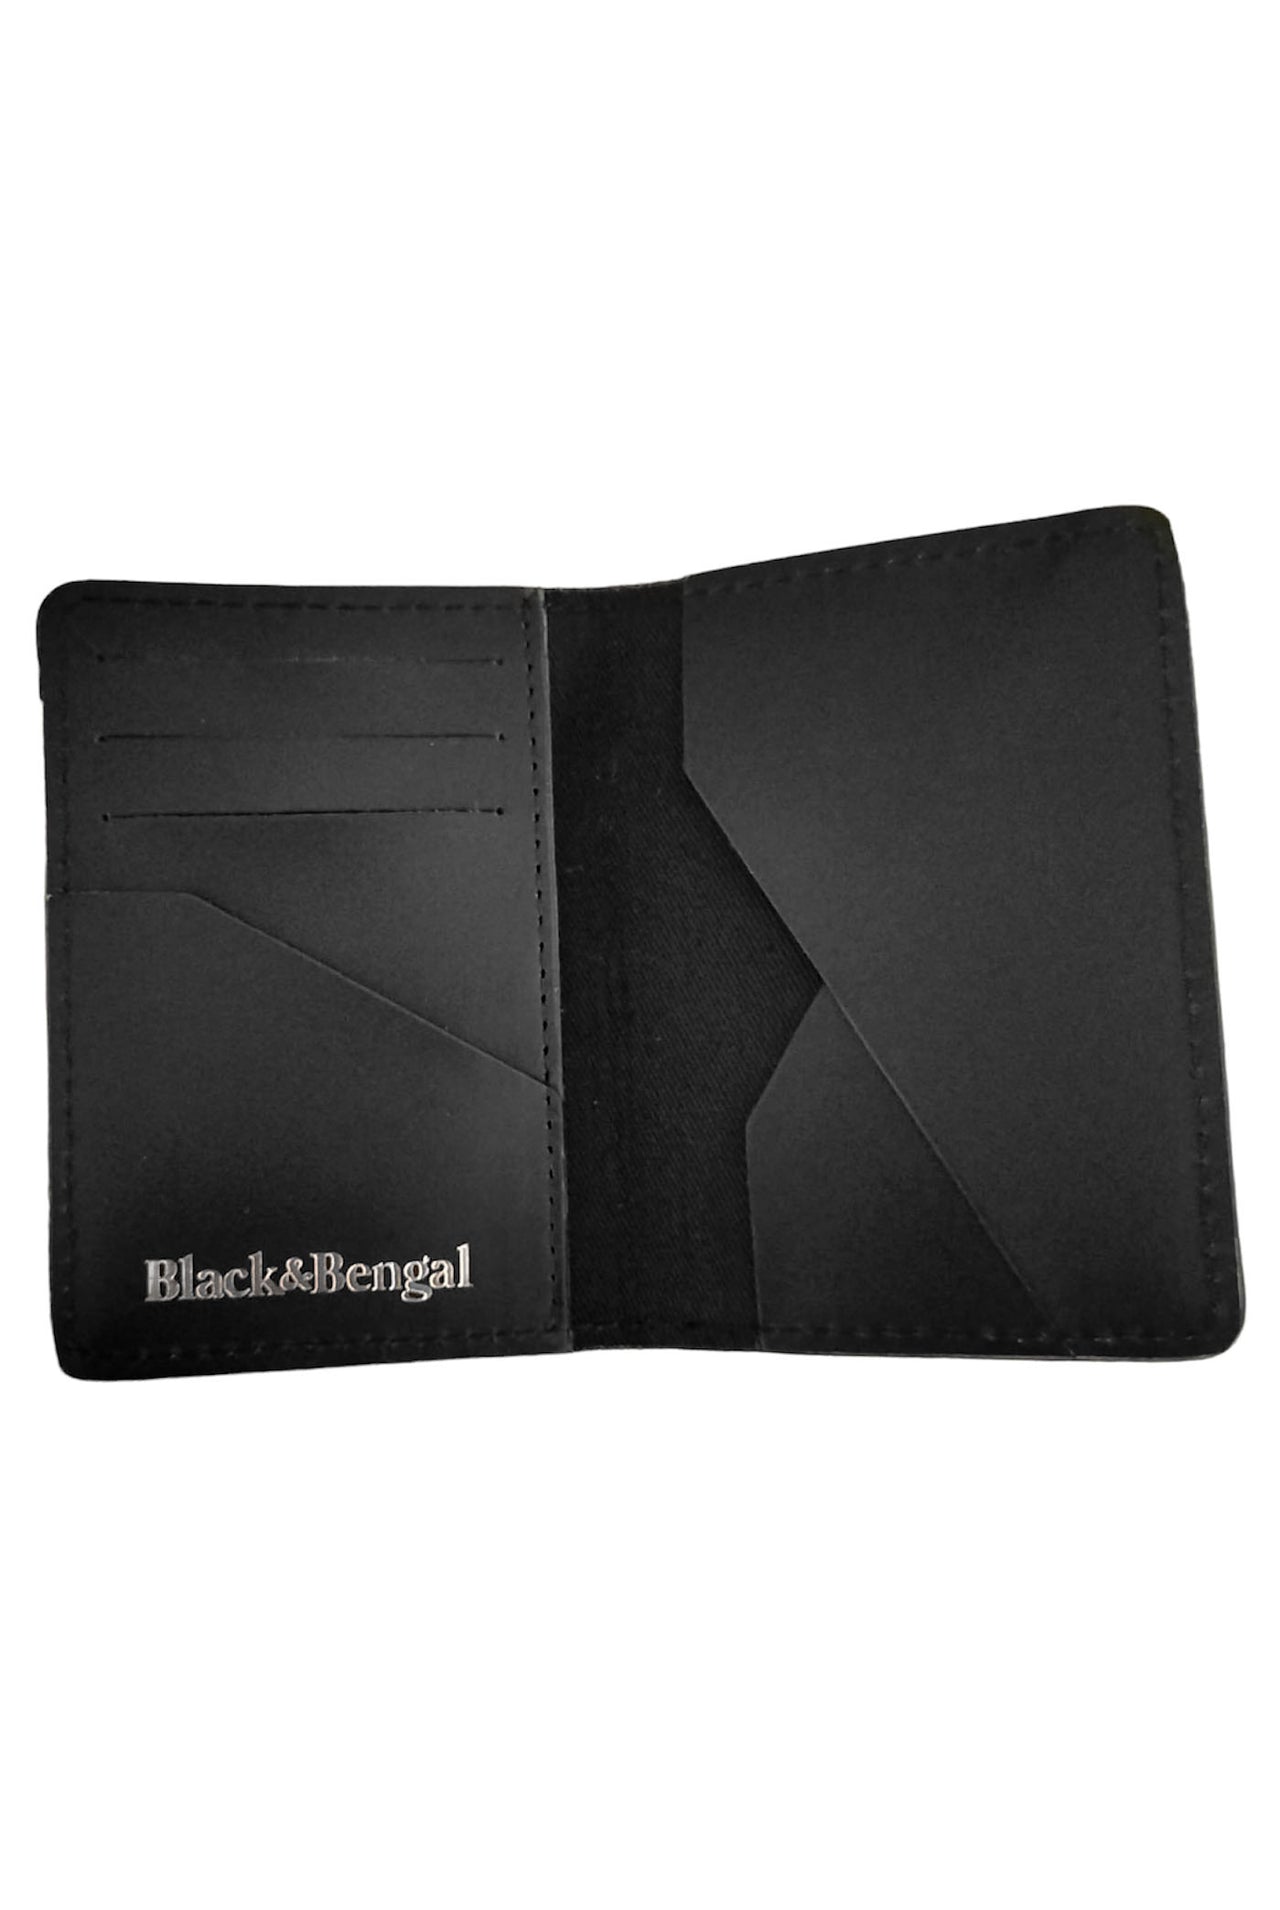 Billetera Black&Bengal Frankfurt Black